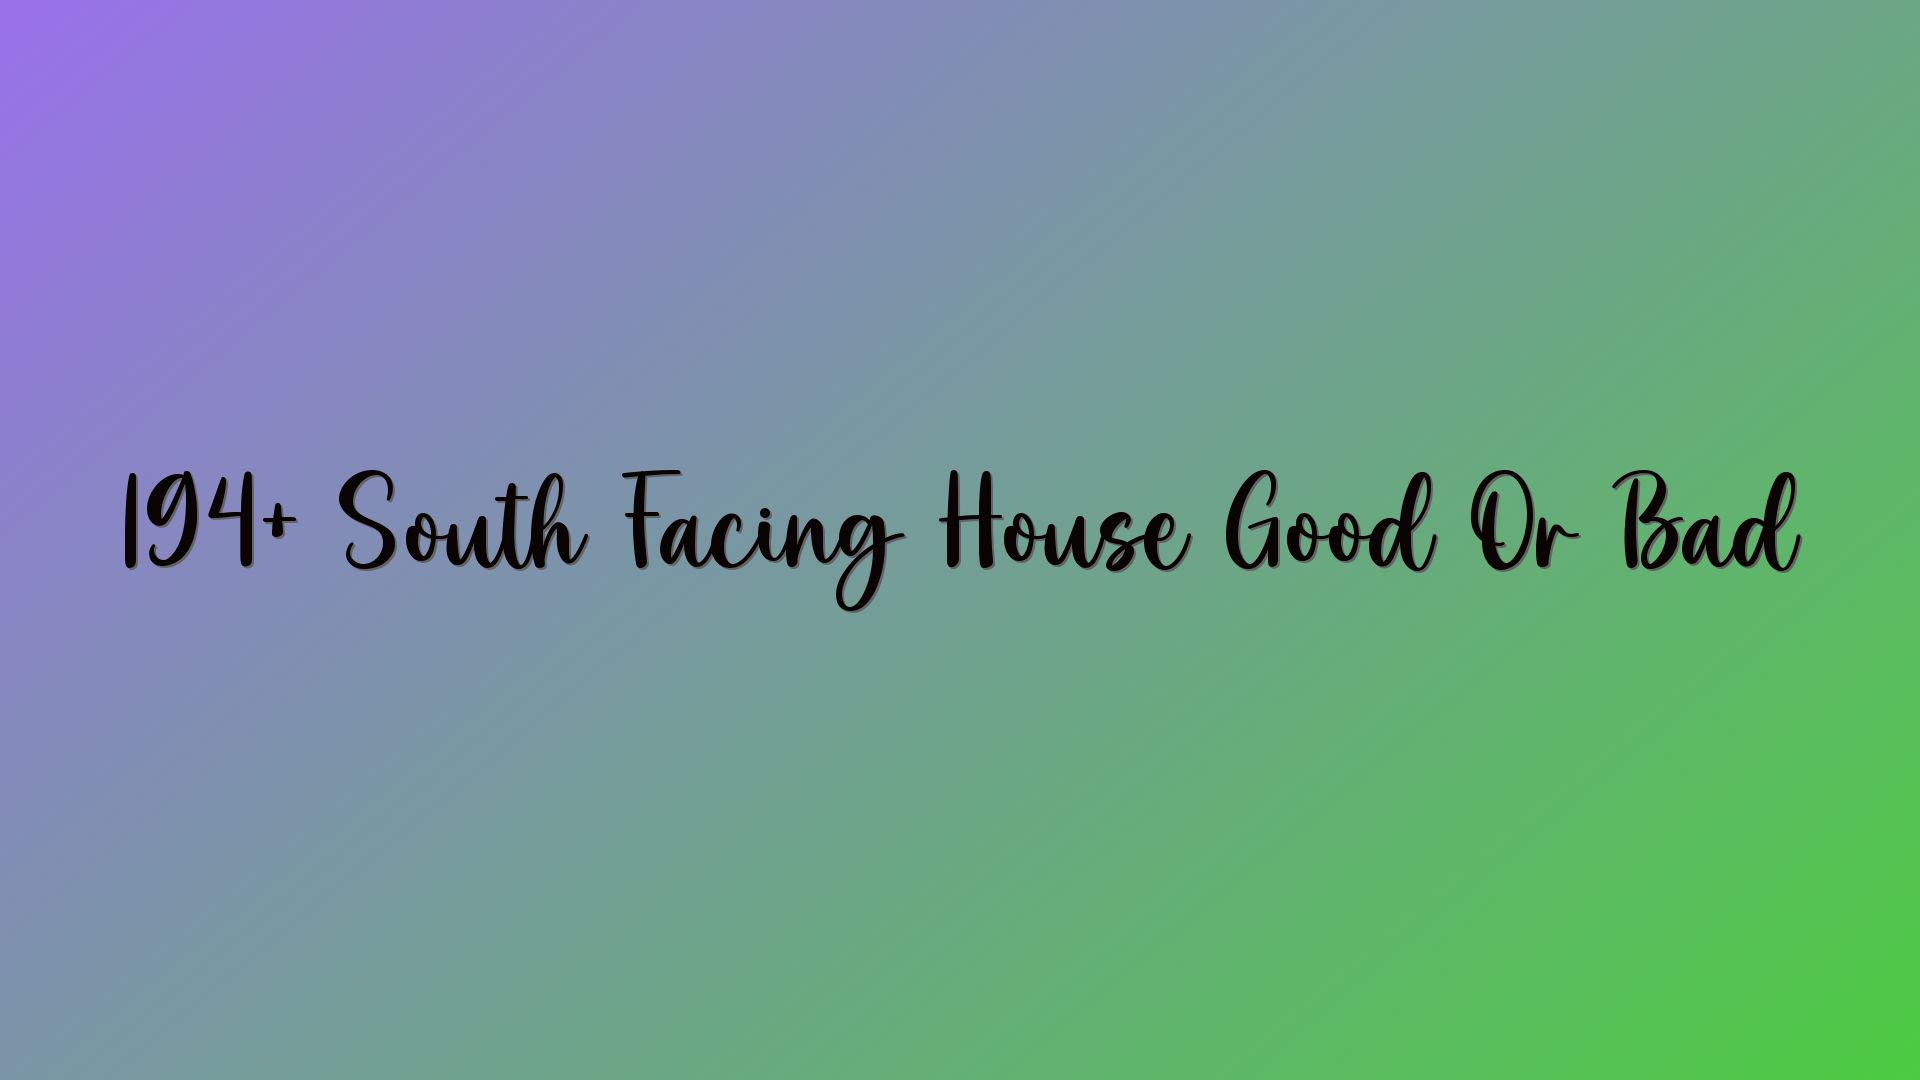 194+ South Facing House Good Or Bad